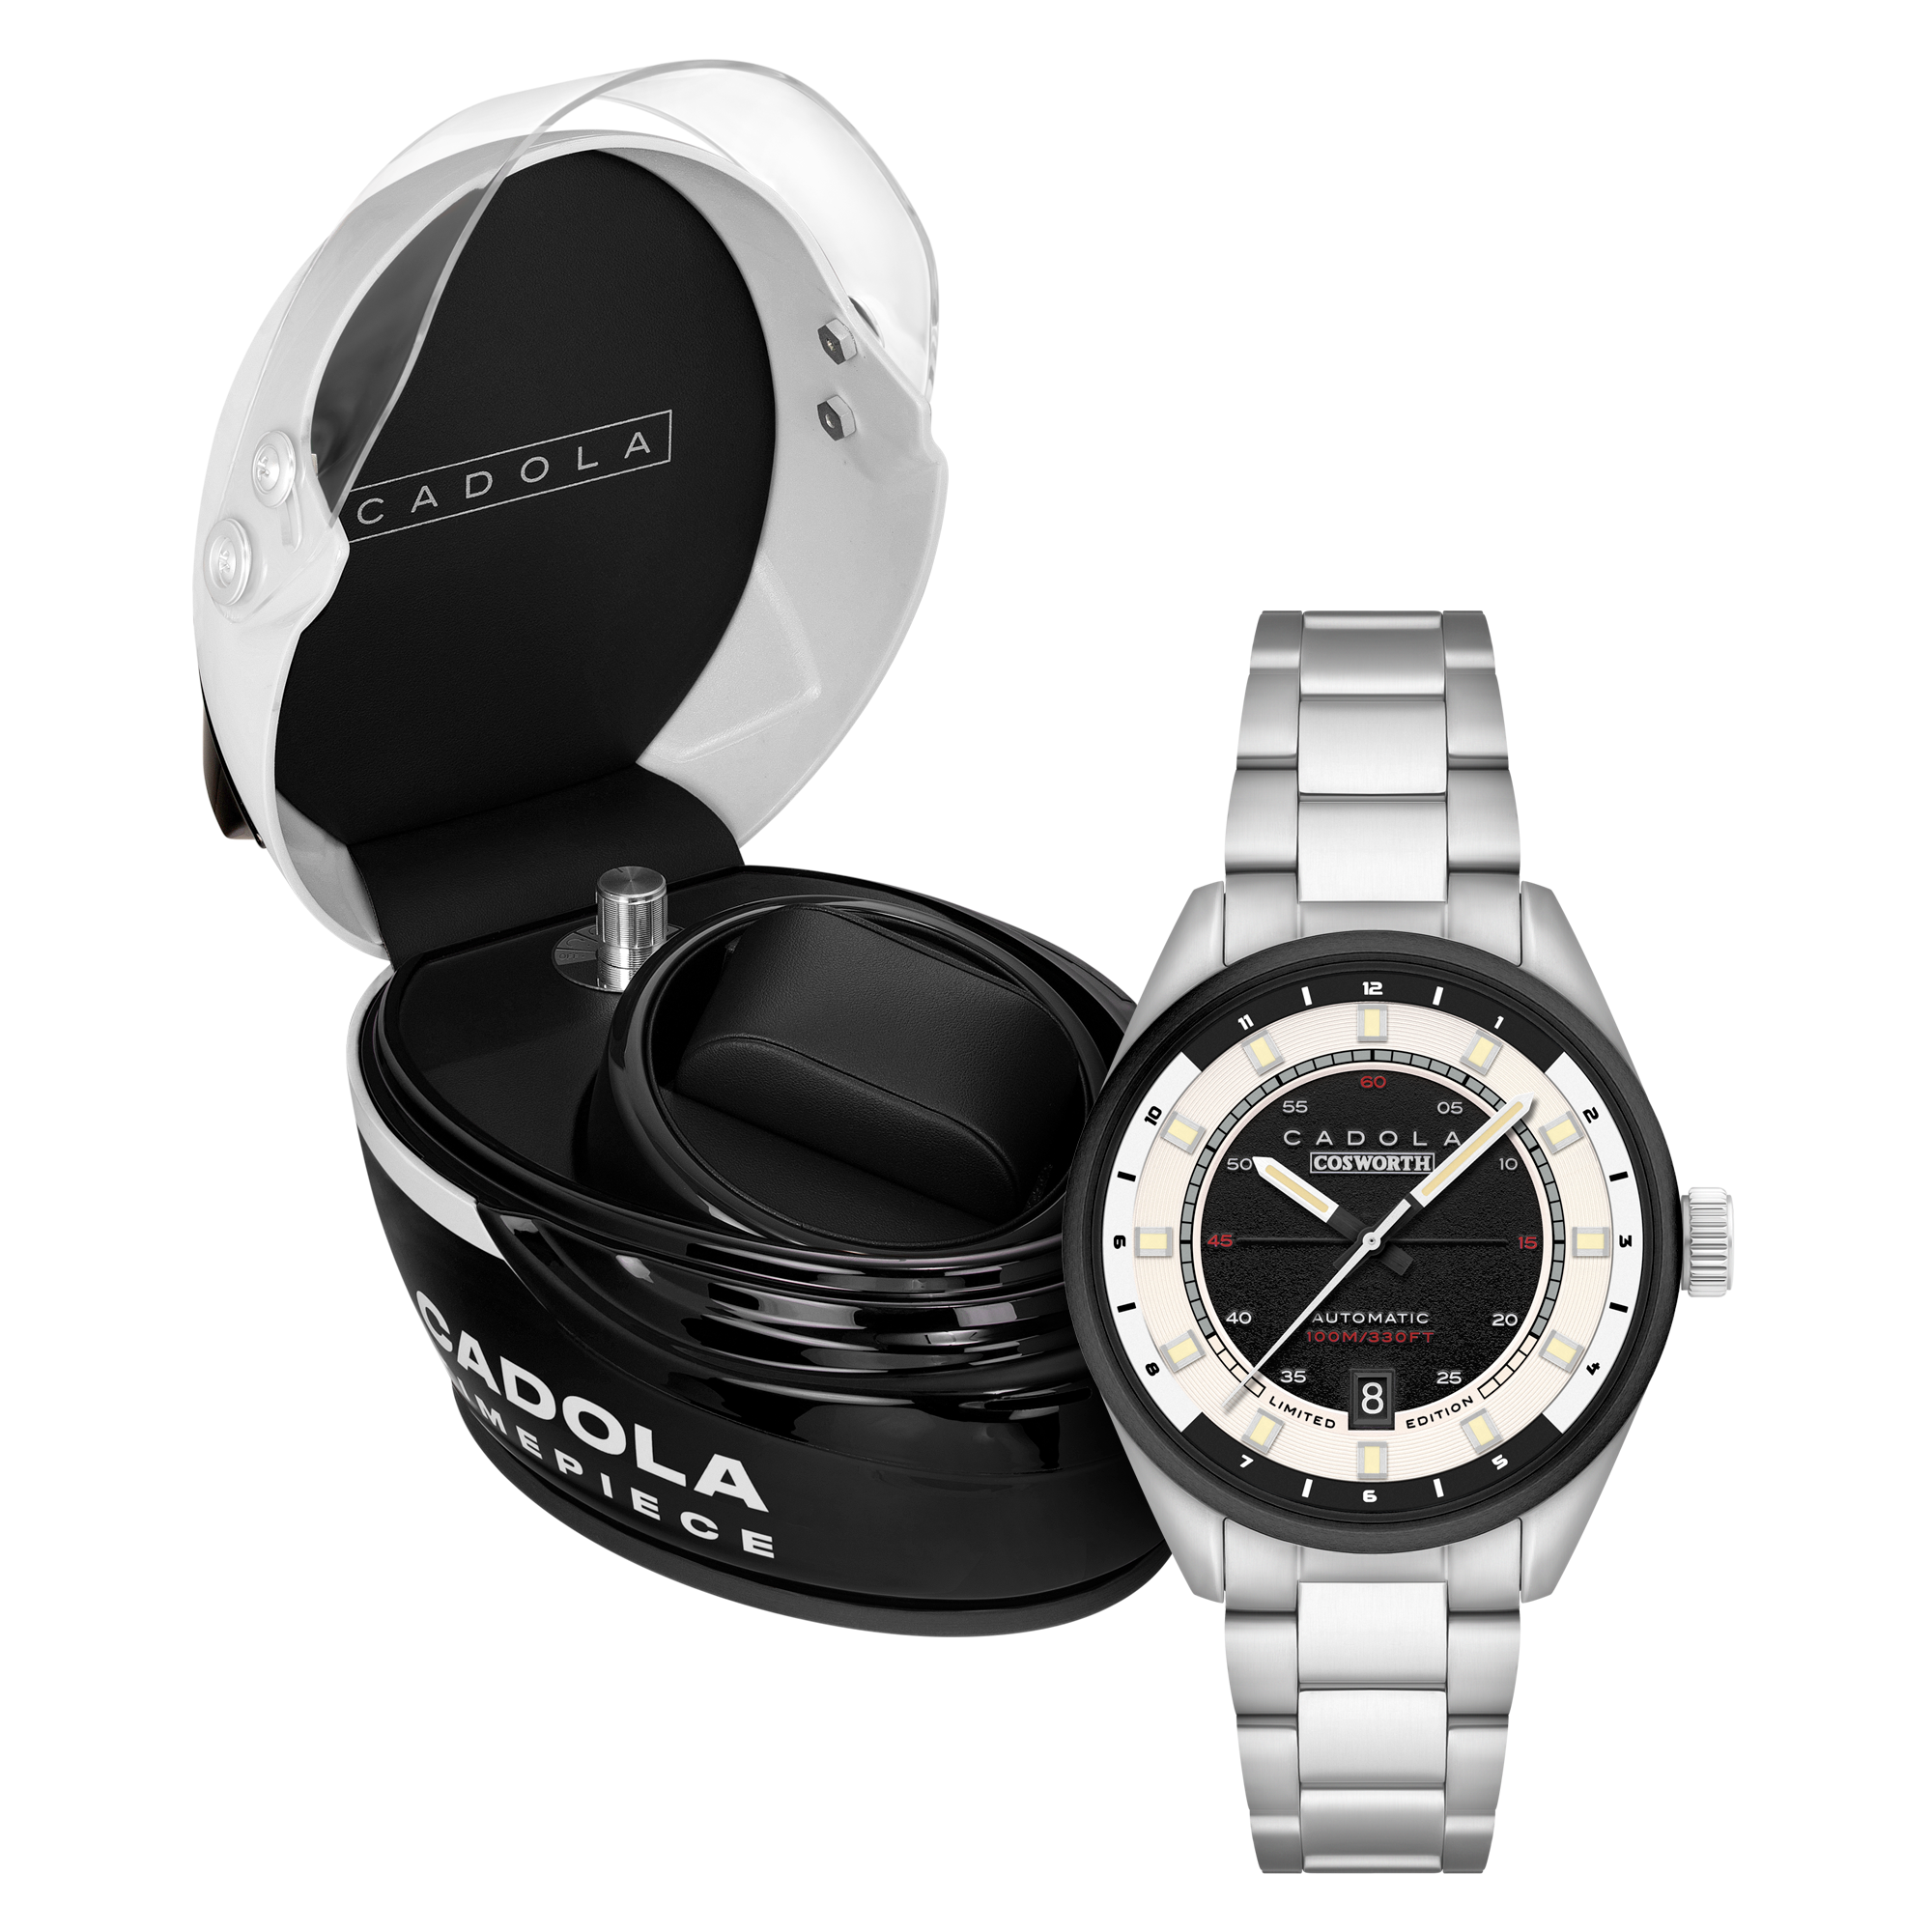 Cadola Cadola Men's Phil Limited Edition Automatic Watch CD-1025-BB